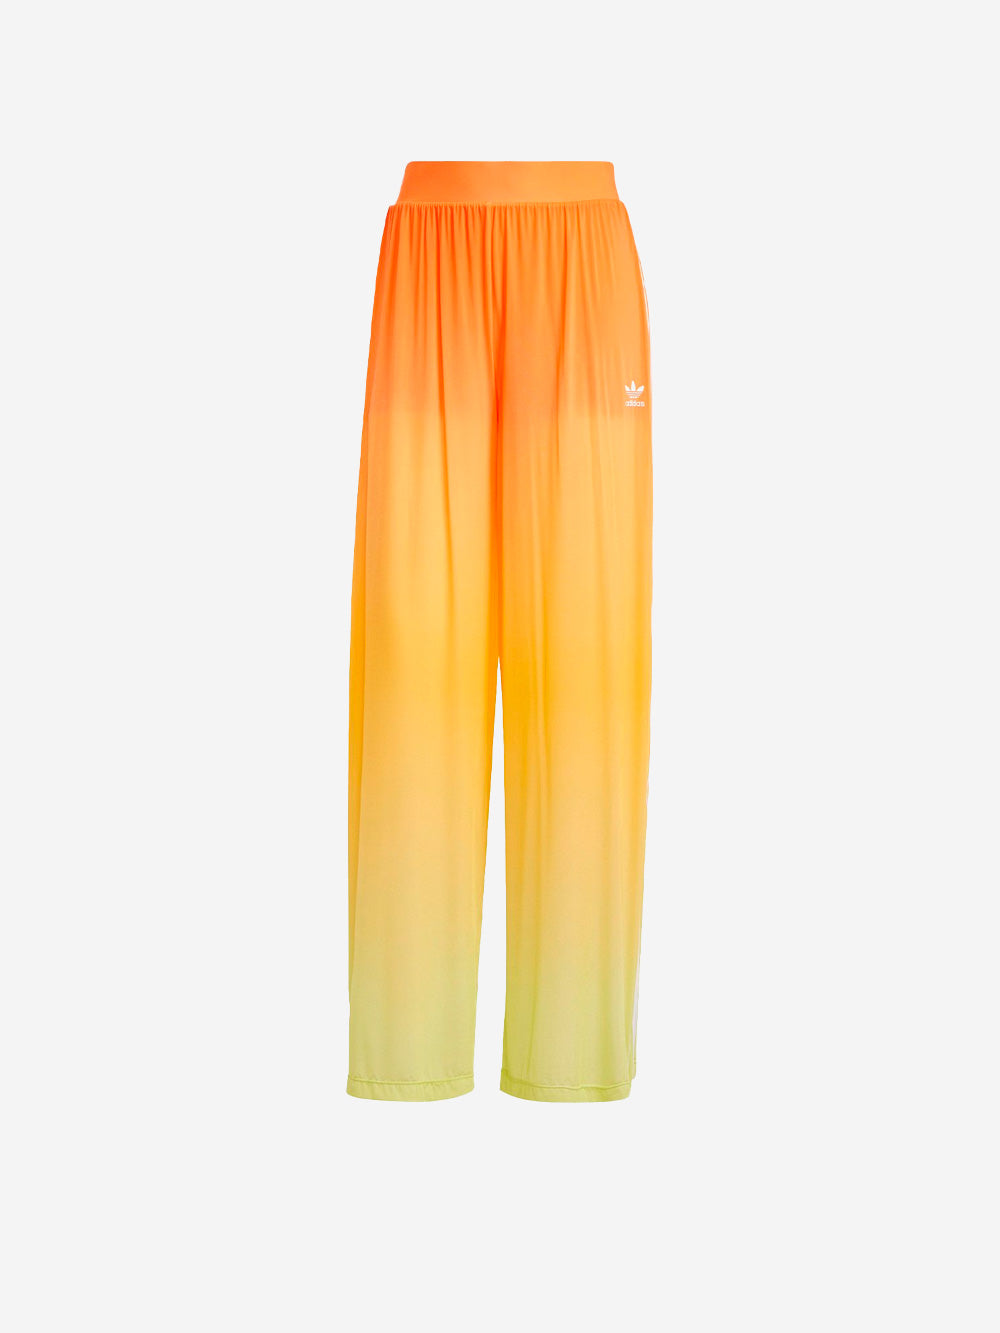 ADIDAS ORIGINALS Pantaloni in maglia wide leg arancioni arancione Urbanstaroma